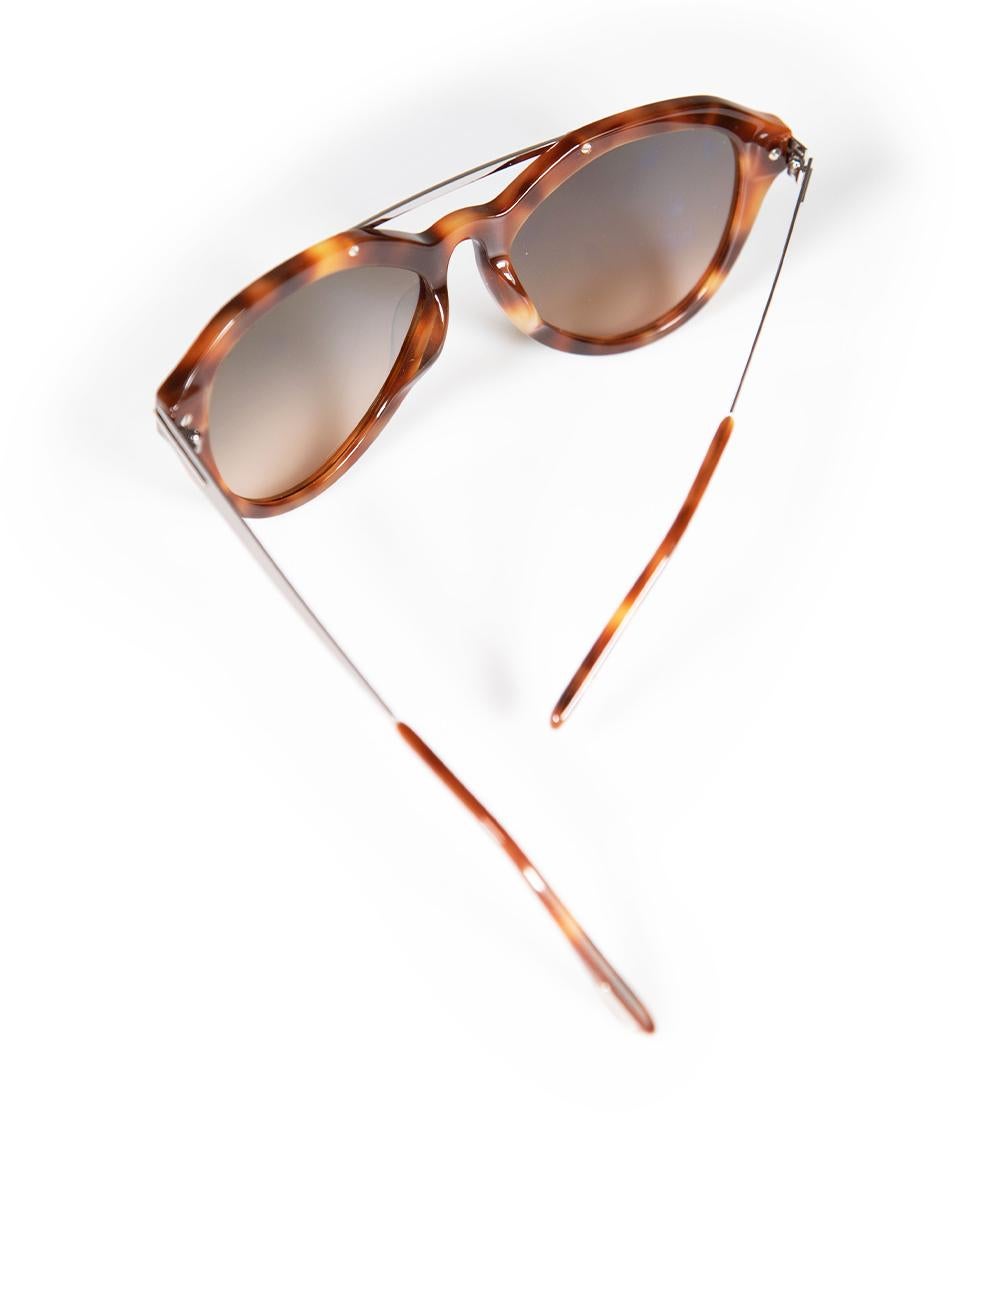 Tom Ford Blonde Havana Lisa Aviator Sunglasses For Sale 3